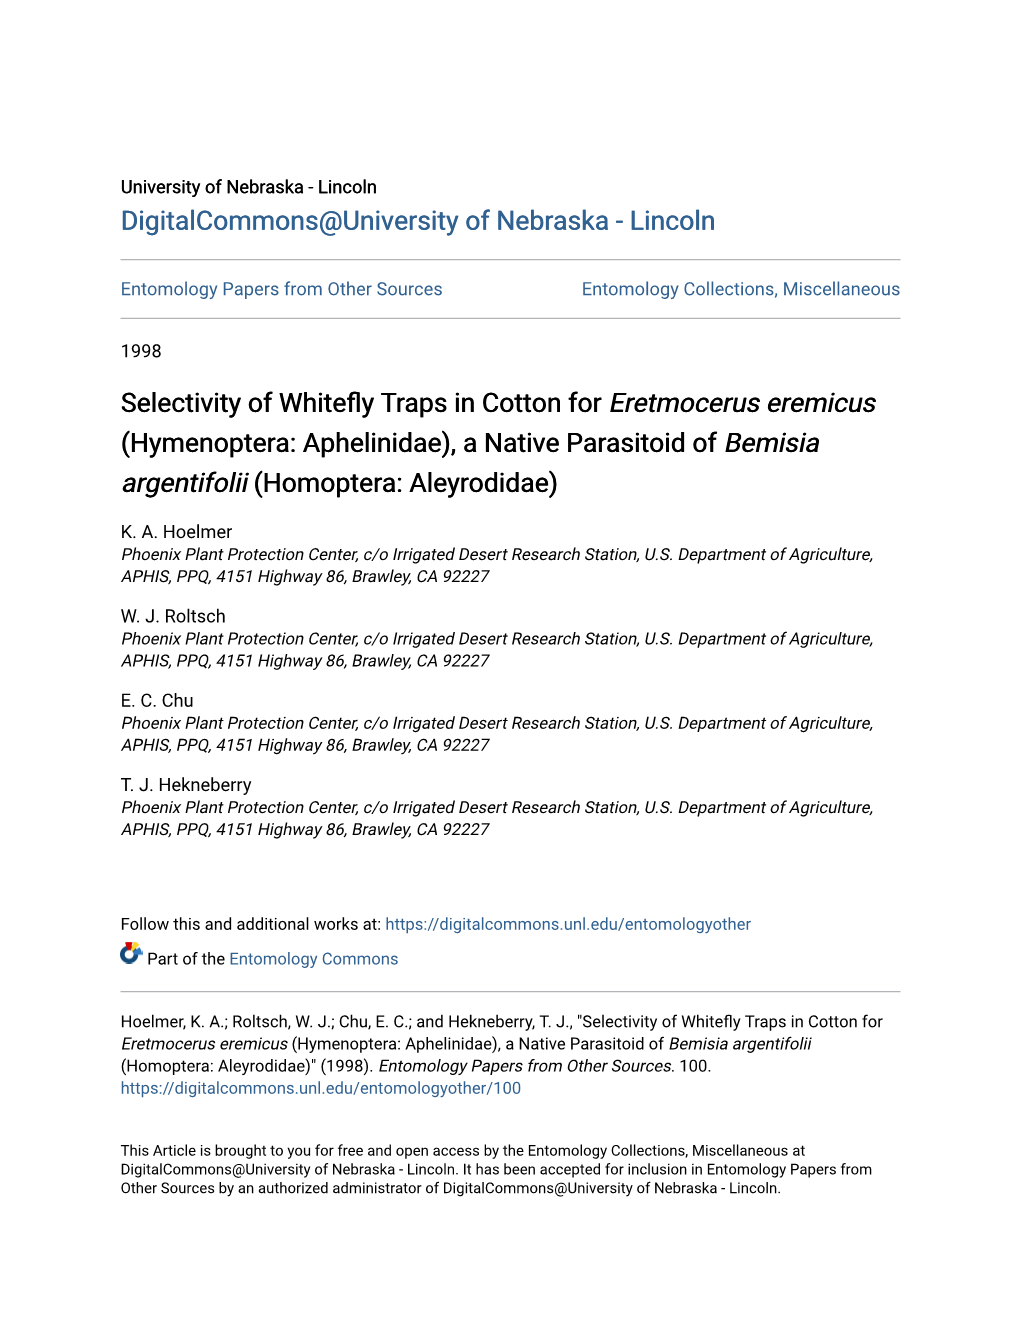 Selectivity of Whitefly Traps in Cotton for Eretmocerus Eremicus (Hymenoptera: Aphelinidae), a Native Parasitoid of Bemisia Argentifolii (Homoptera: Aleyrodidae)